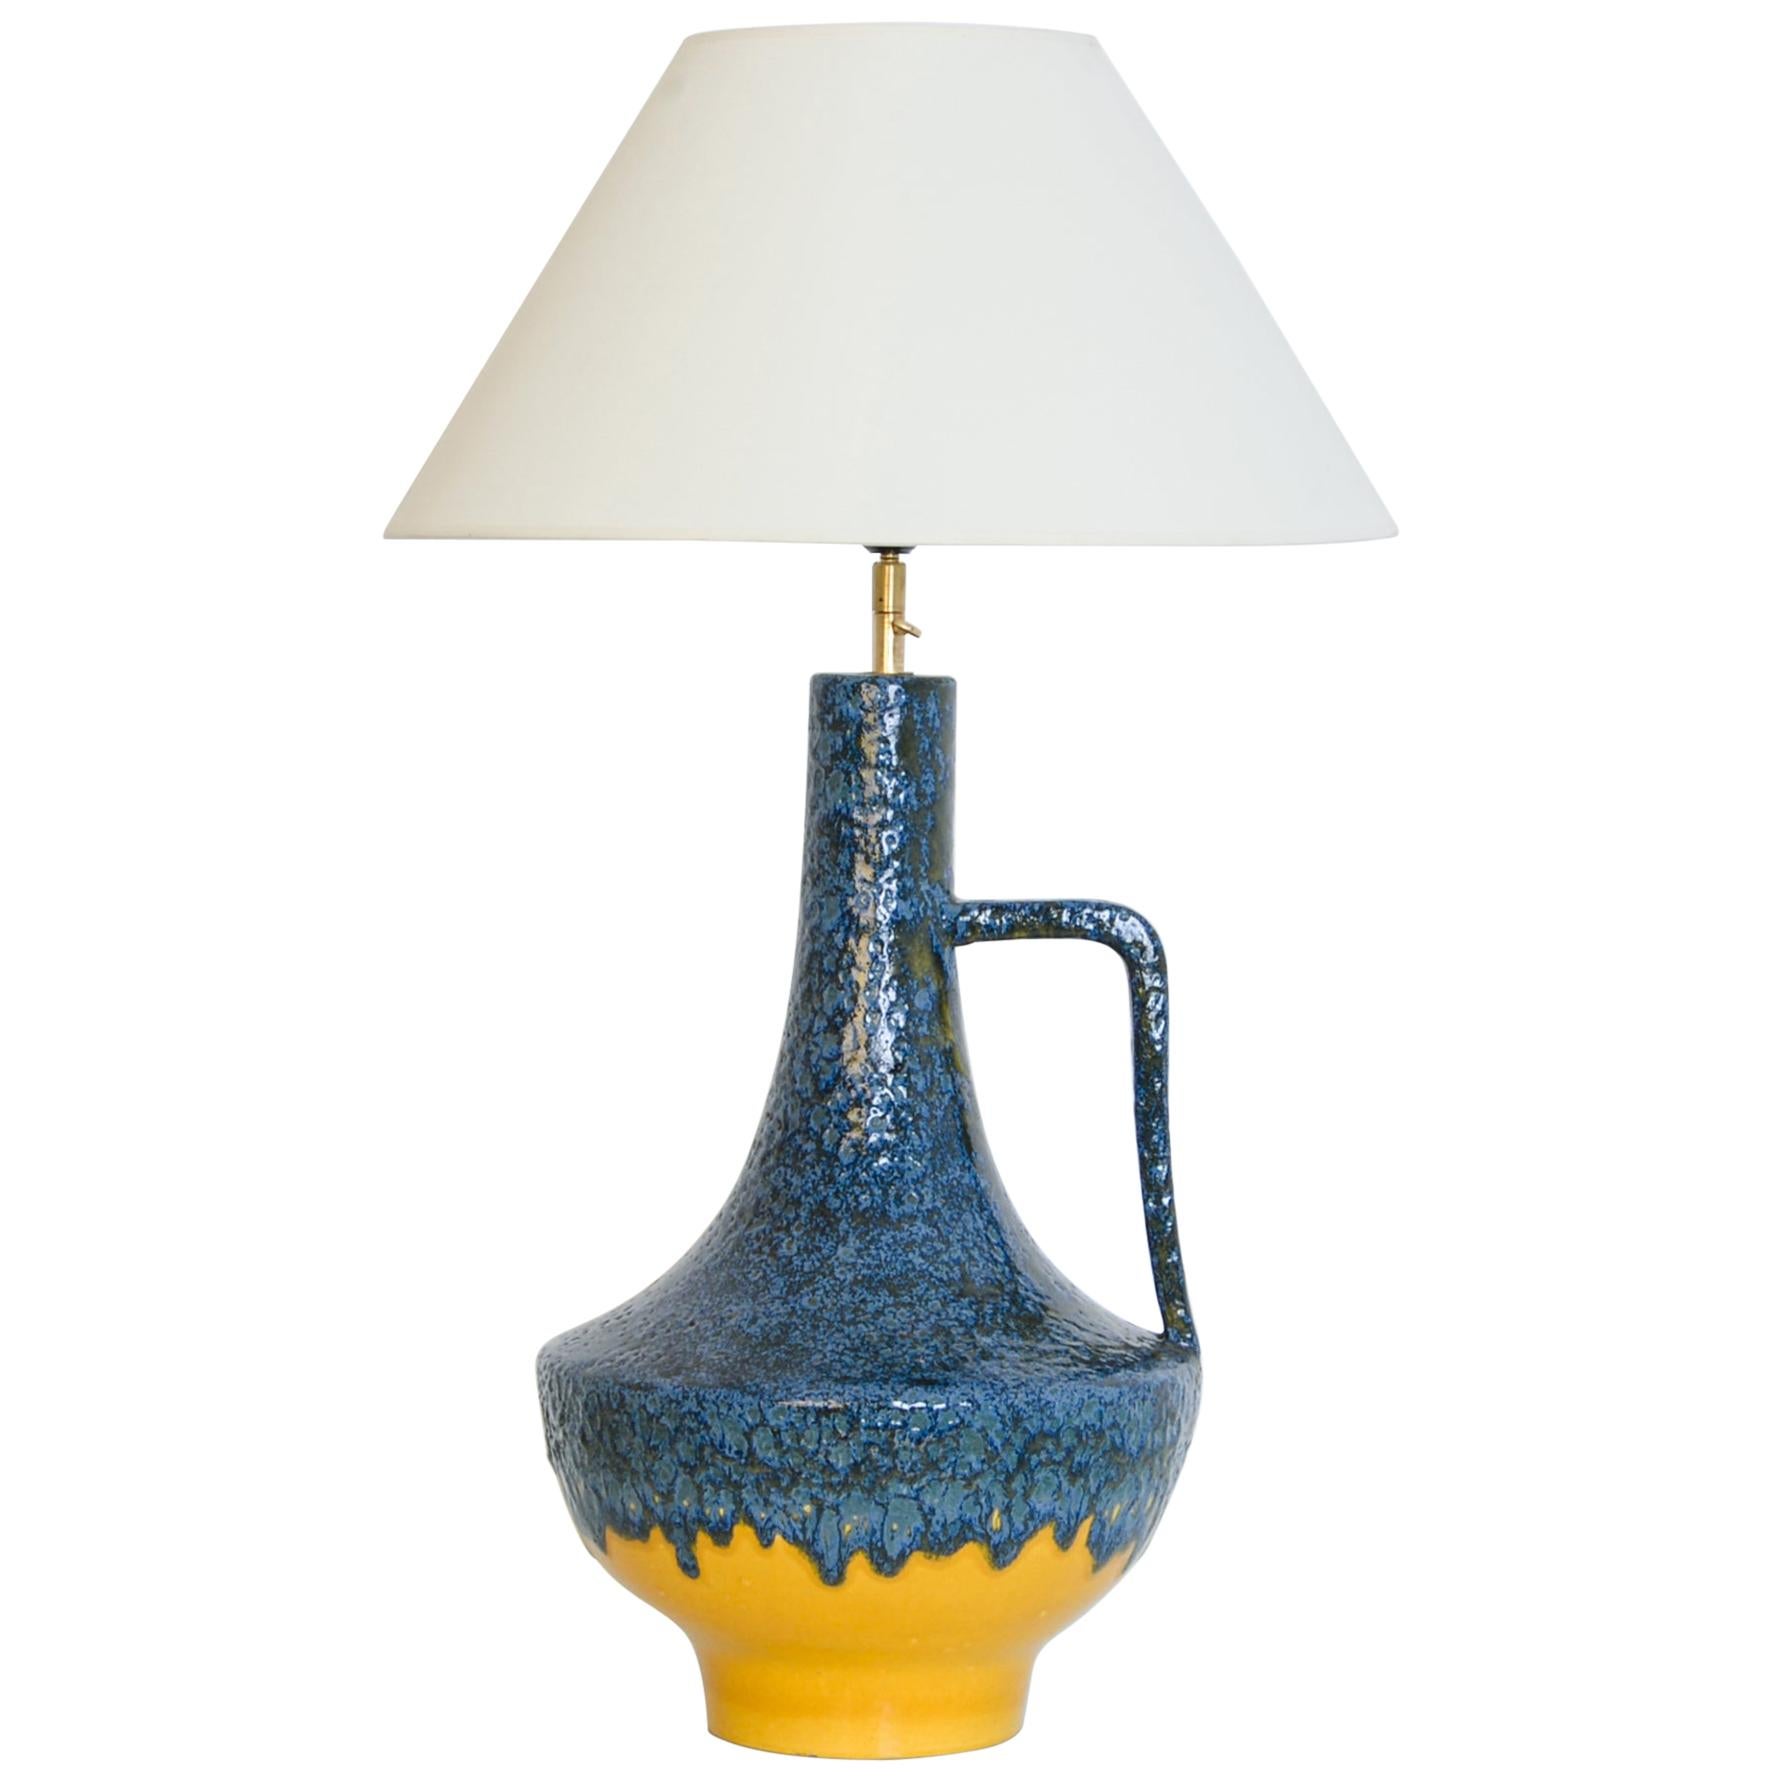 Midcentury W. Germany Ceramic Vase Table Lamp